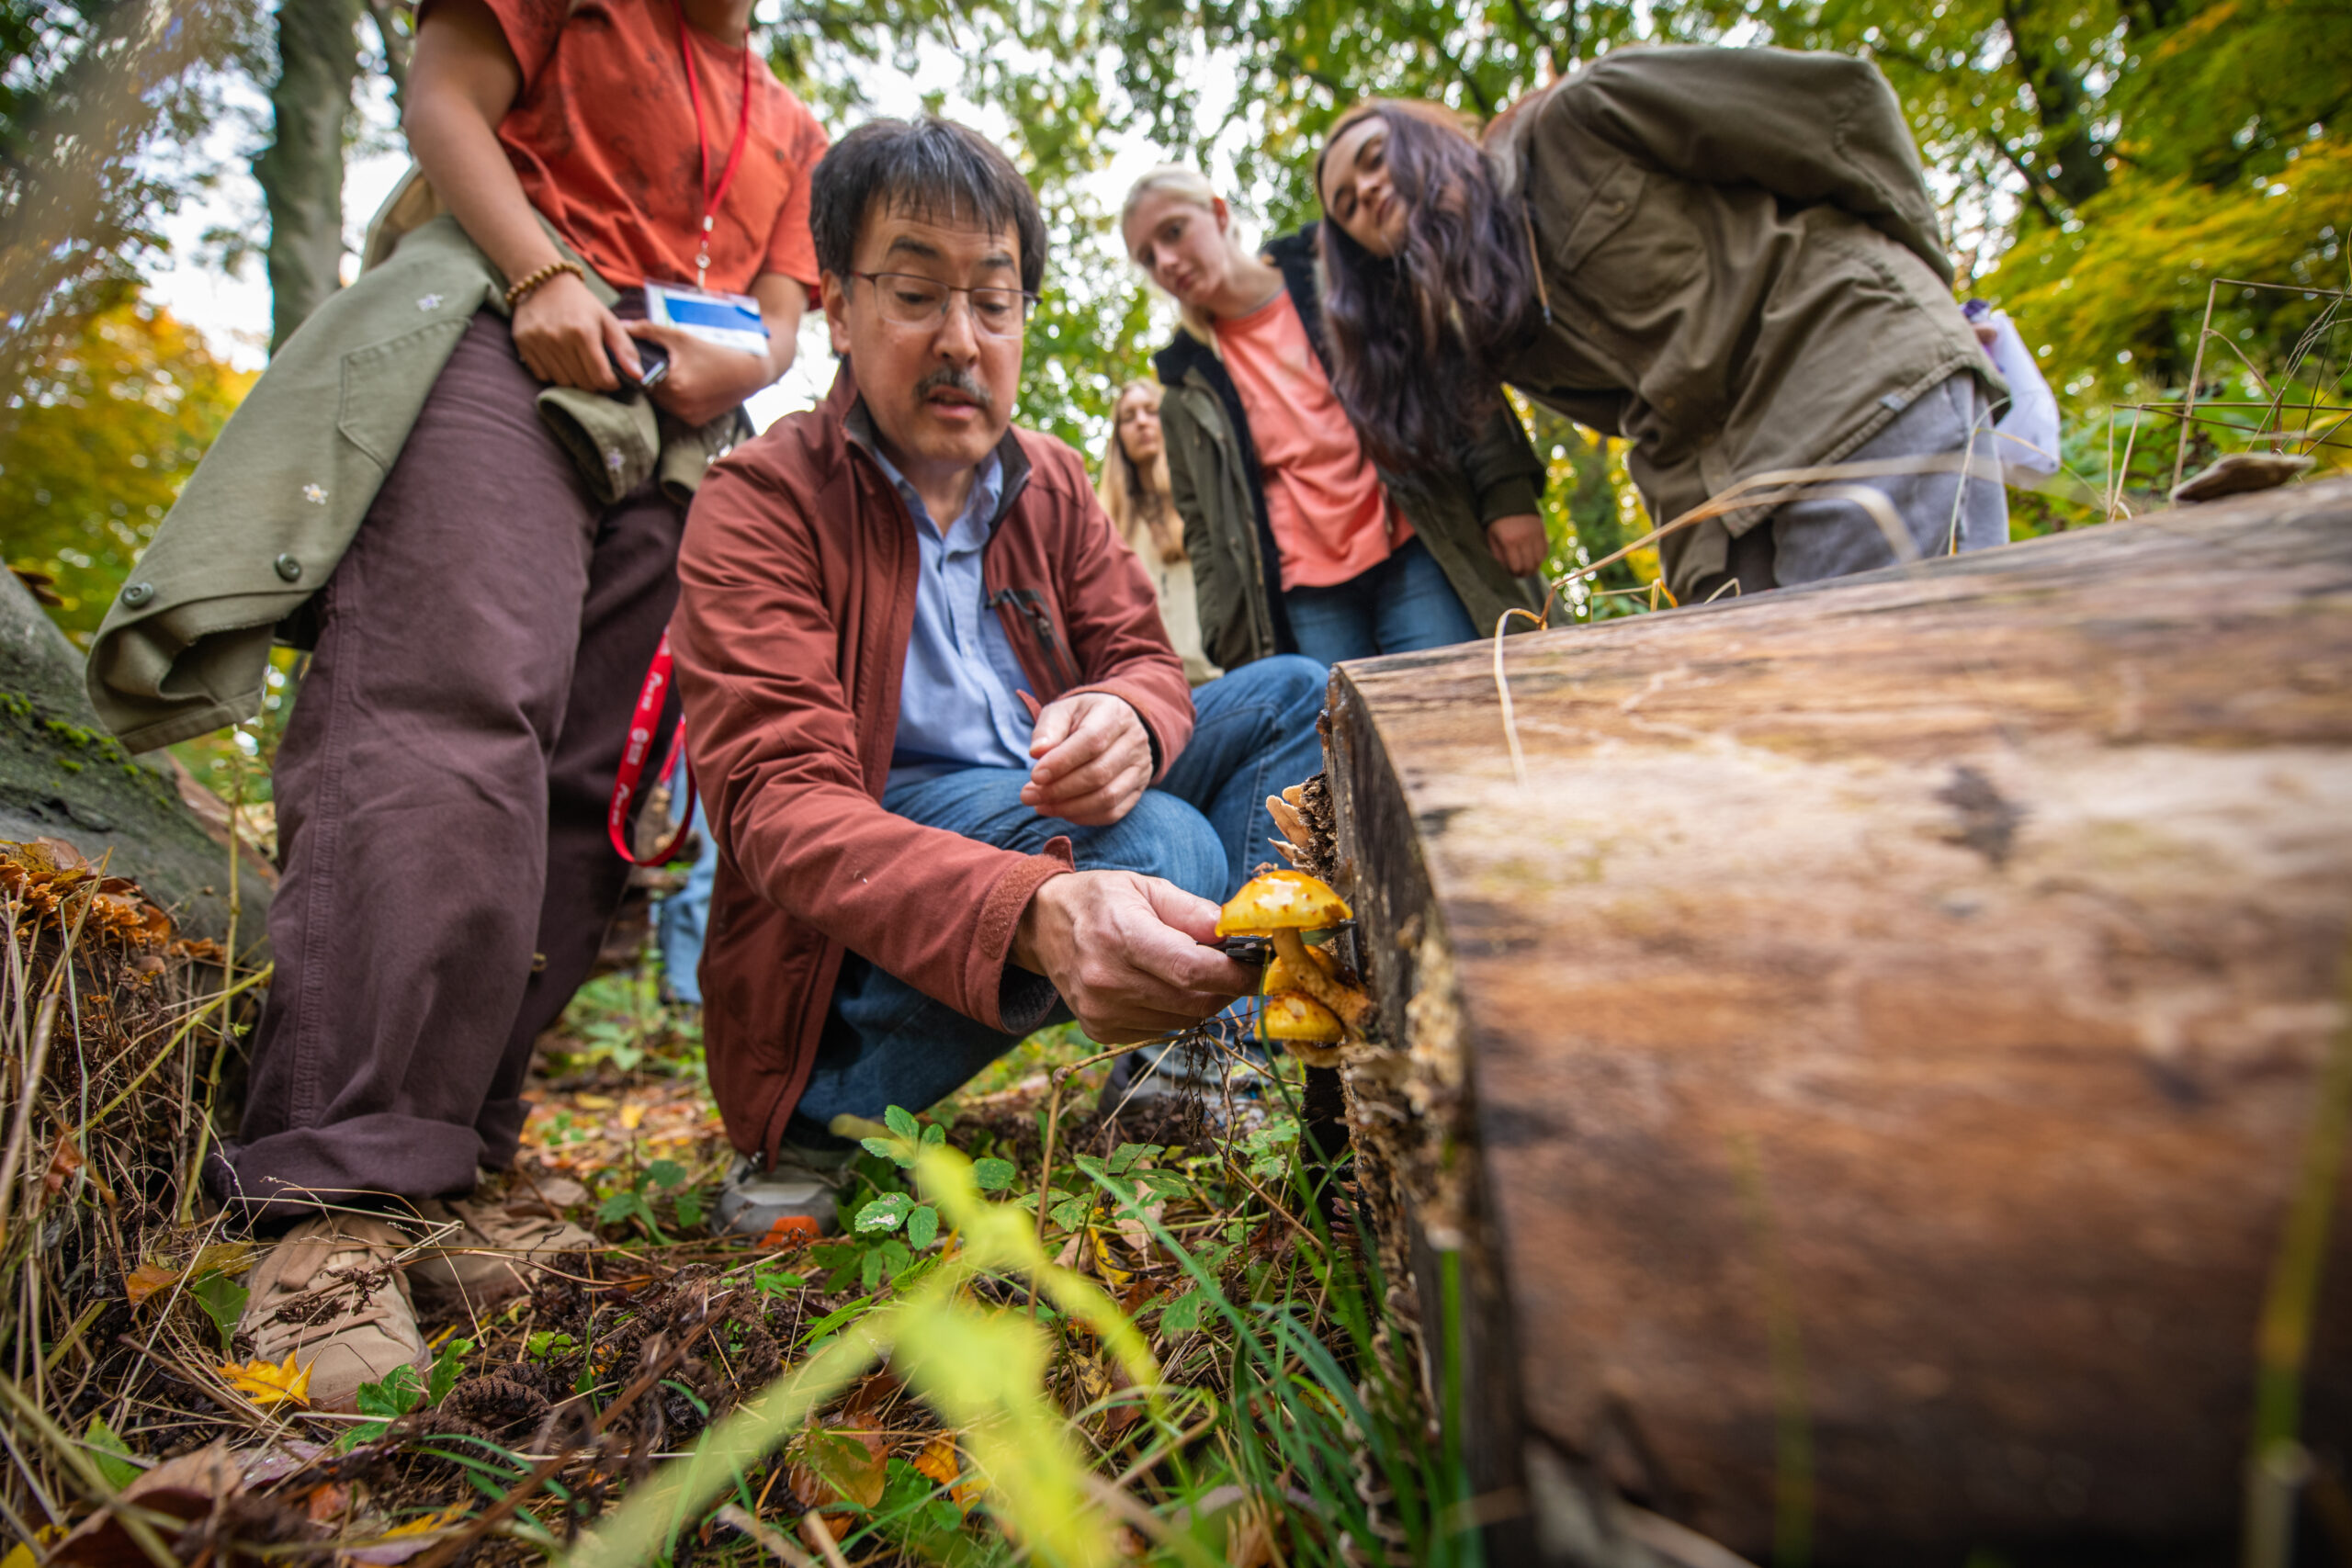 Professor David Hibbett and students examine a mushroom in nature.